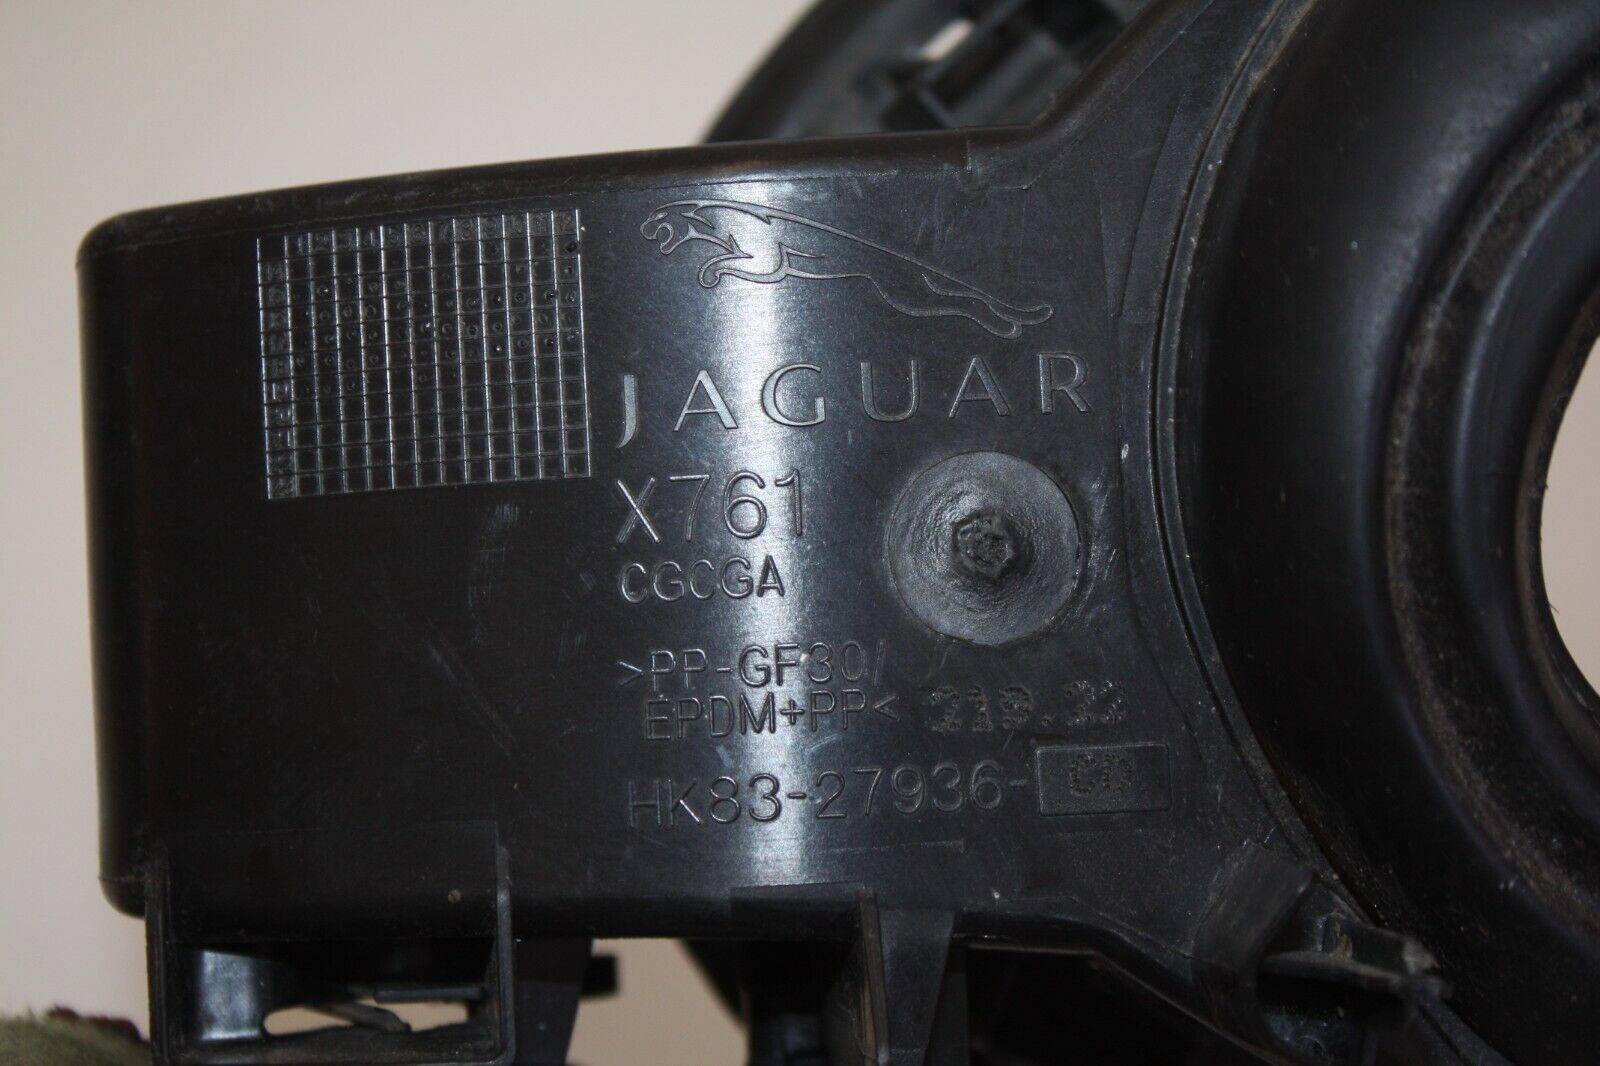 Jaguar-F-Pace-X761-Fuel-Tank-Flap-Cover-Cap-HK83-27936-CD-Genuine-176230606986-10